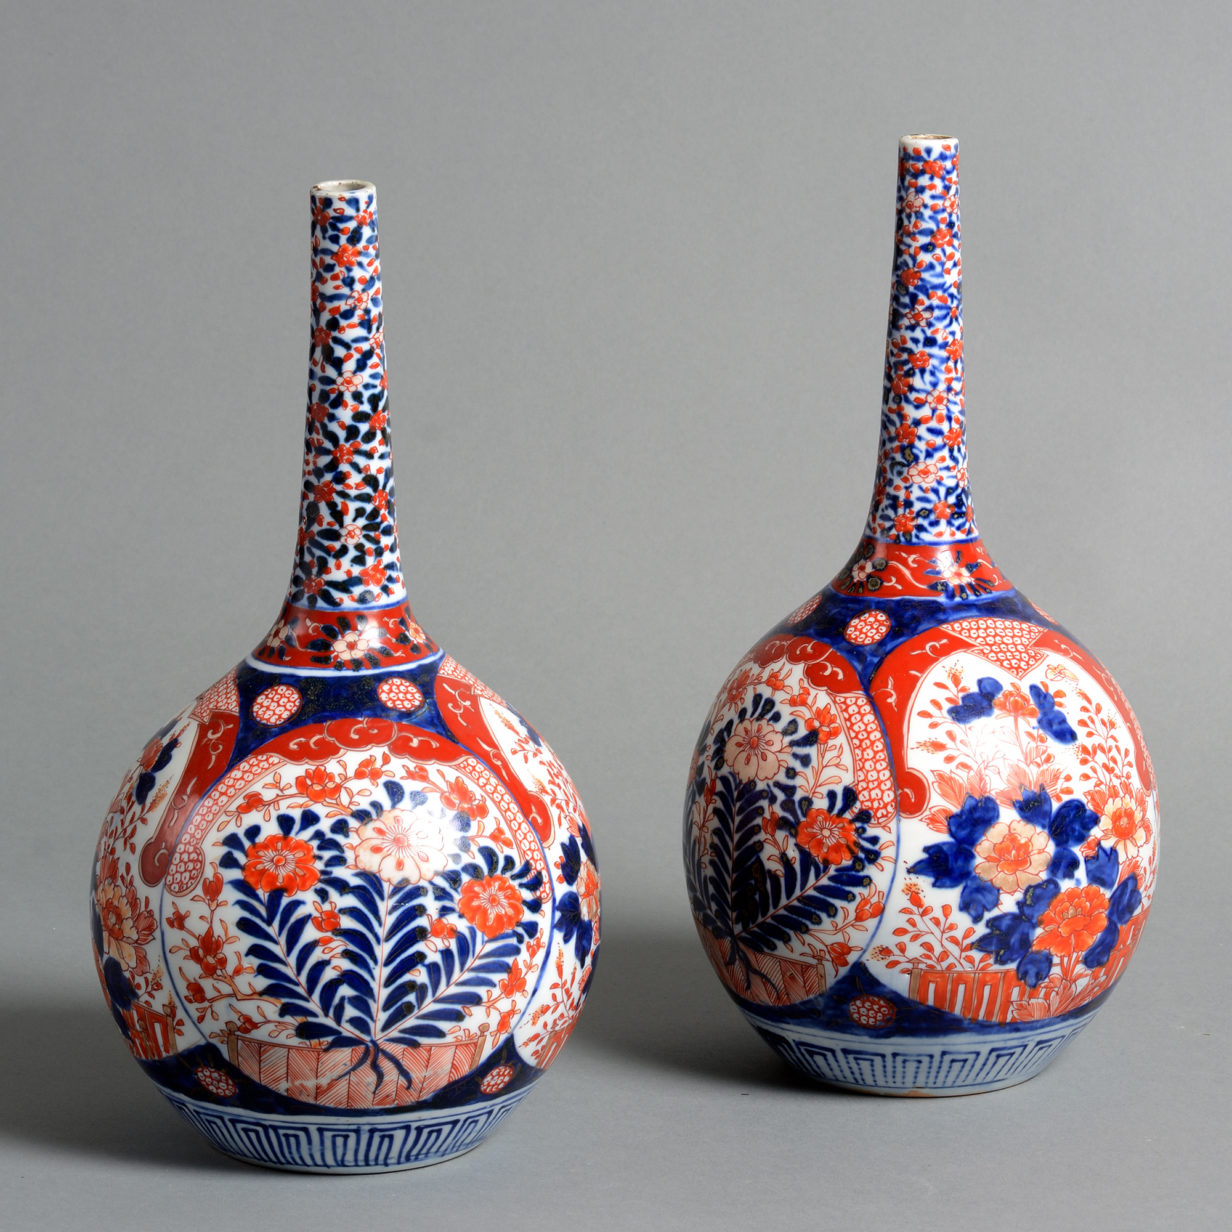 A pair of 19th century imari porcelain bottle vases